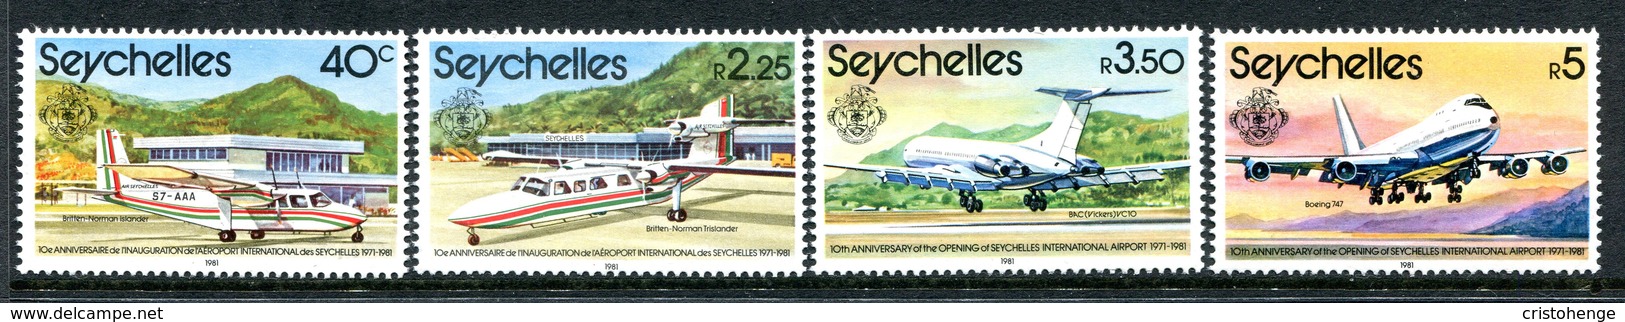 Seychelles 1981 Tenth Anniversary Of Opening Of Seychelles International Airport Set MNH (SG 514-517) - Seychelles (1976-...)